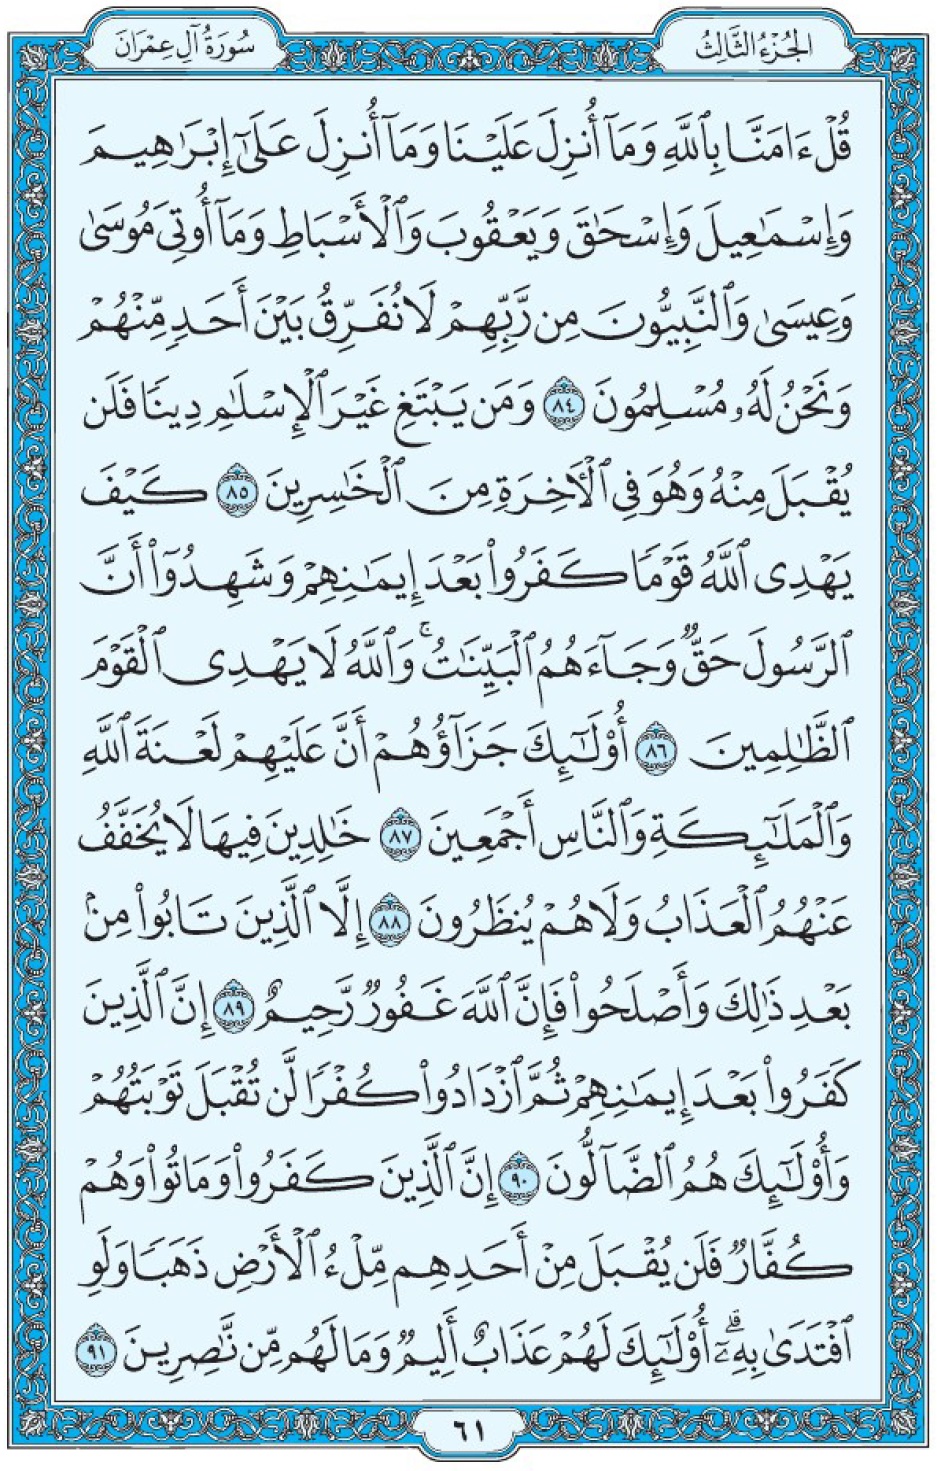 Коран Мединский мусхаф страница 61, Али Имран, аят 84-91